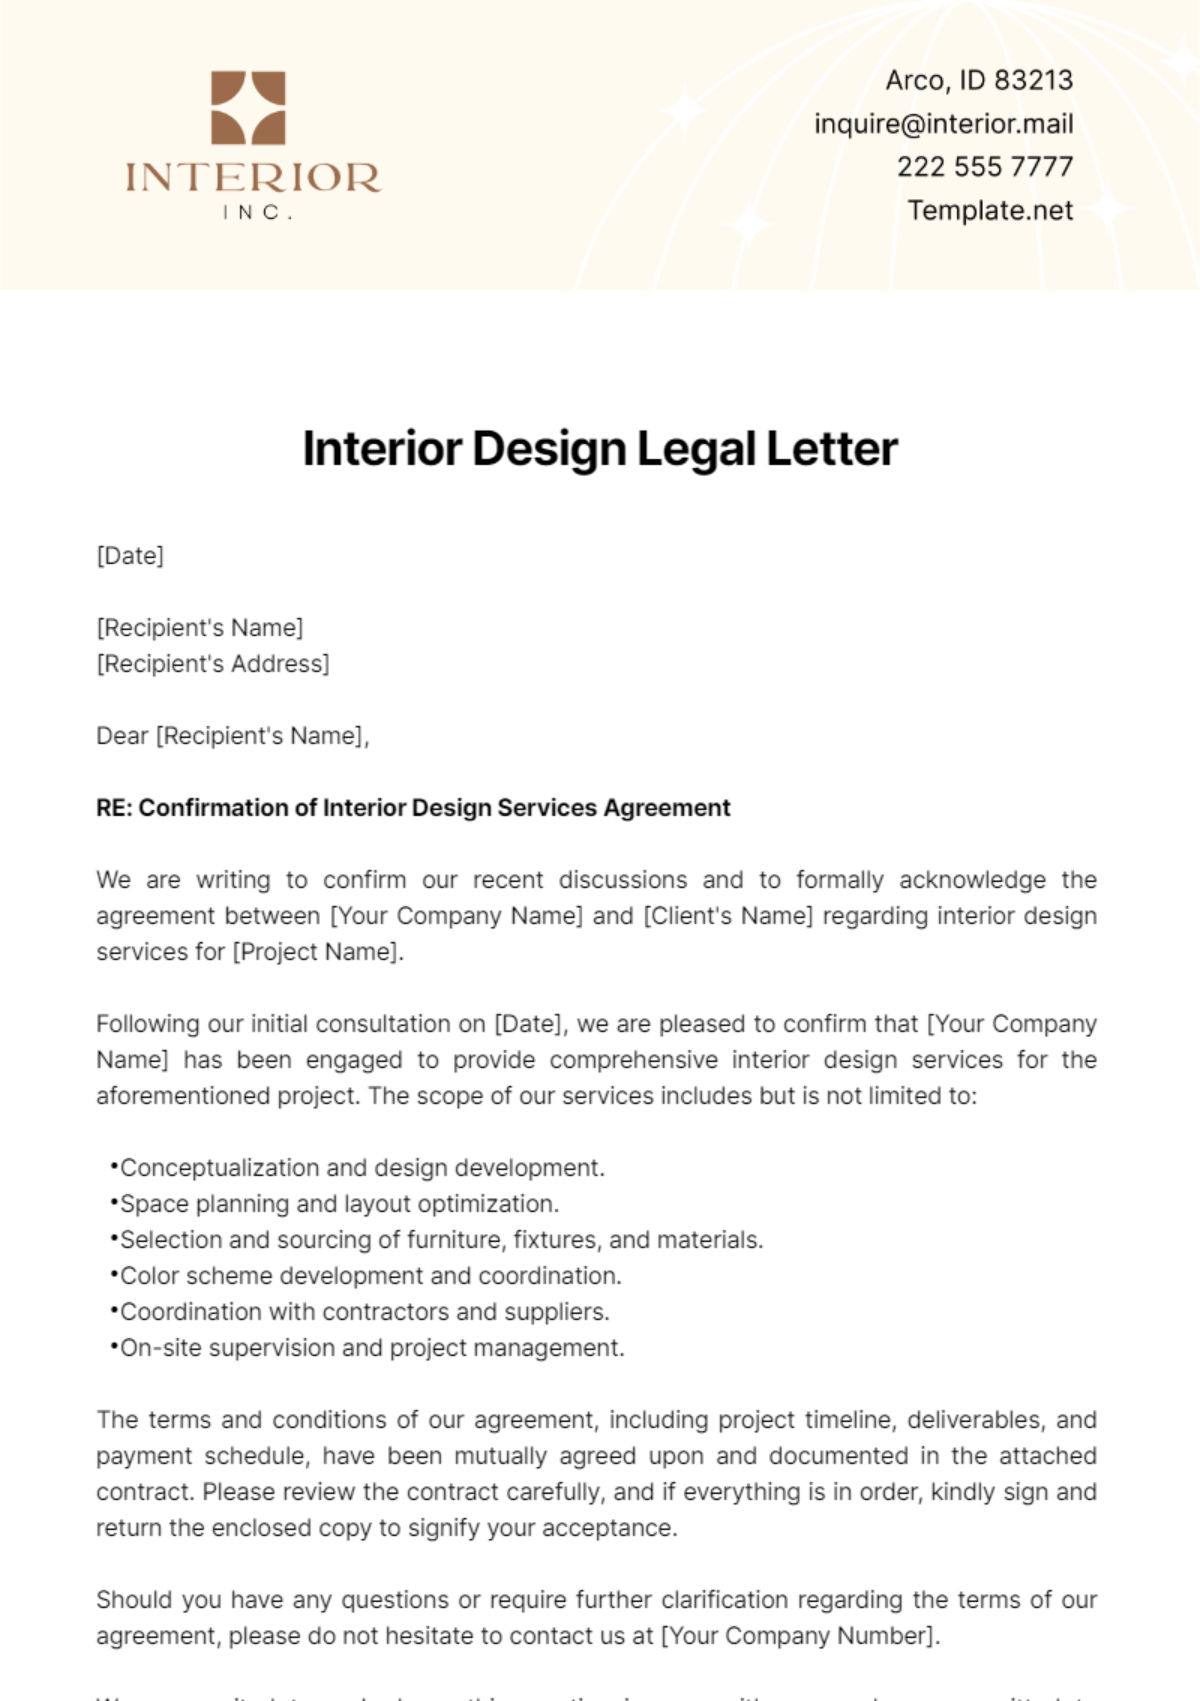 Interior Design Legal Letter Template